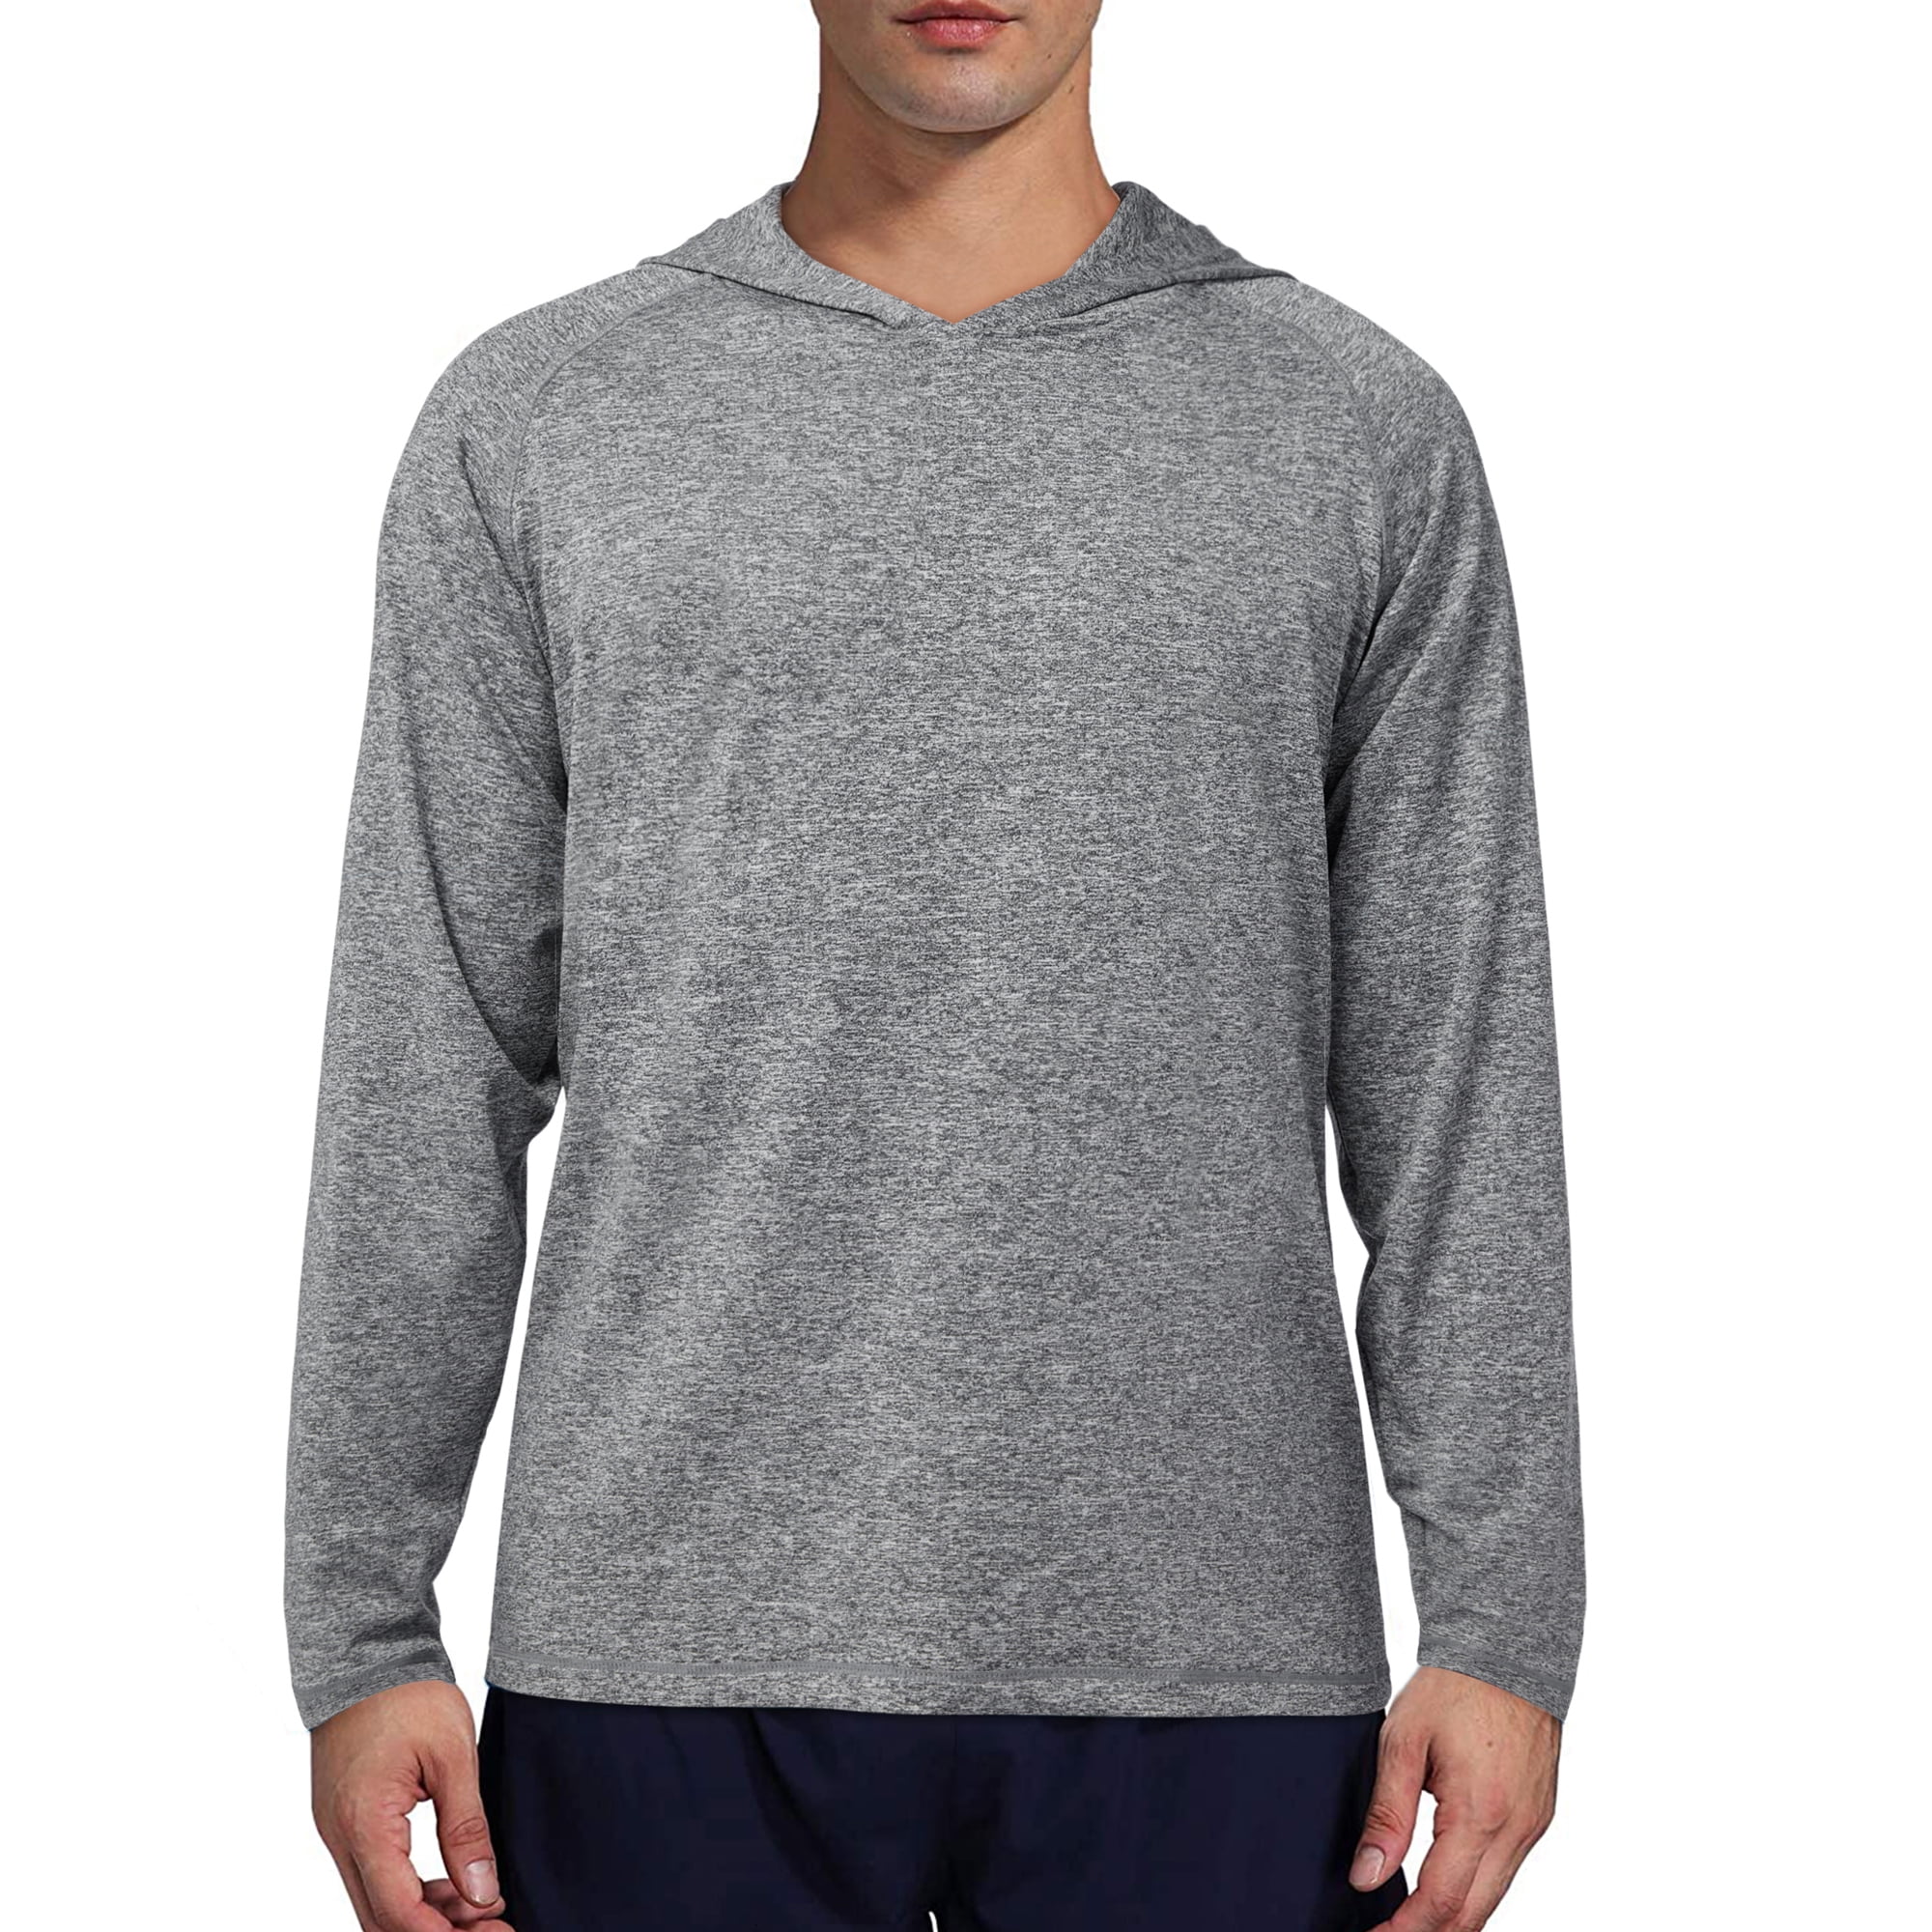 Men's Hoodie Long Sleeve Quick Dry Lightweight Fishing Workout Running Hooded  Sweatshirts, Gray, L 